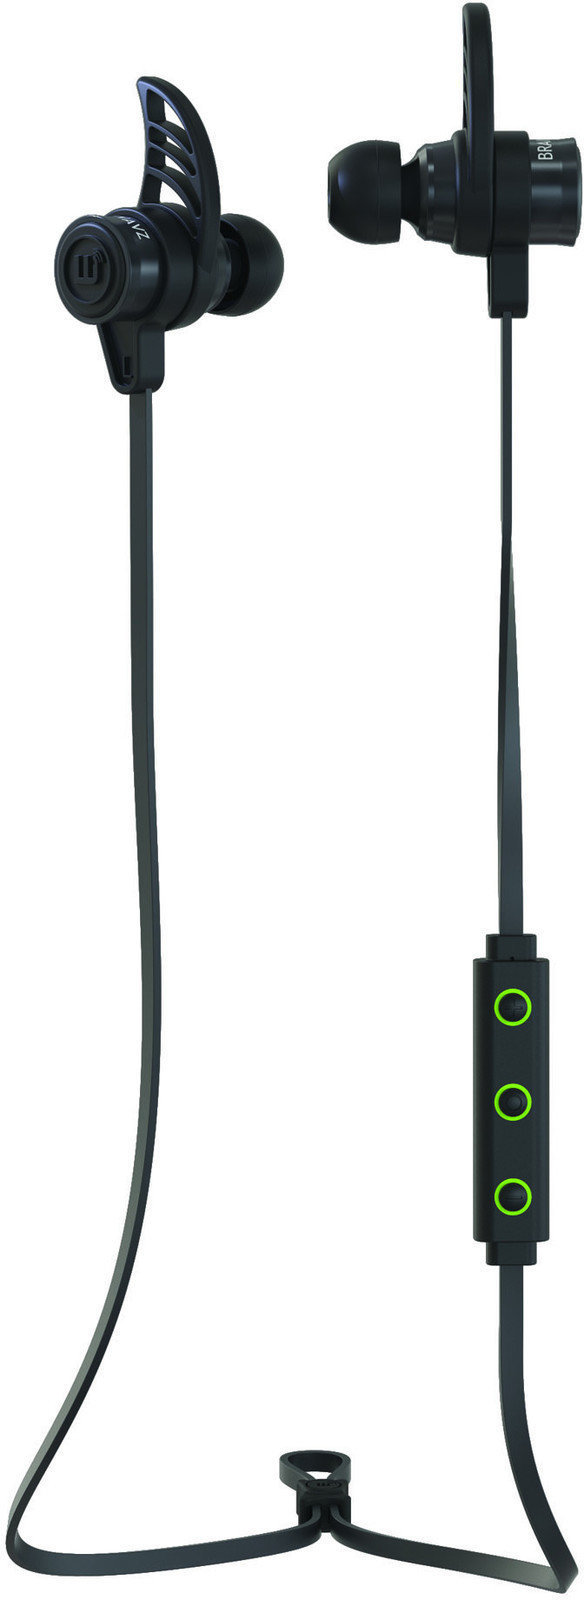 Bezdrátové sluchátka do uší Brainwavz BLU-200 Bluetooth 4.0 aptX In-Ear Earphones Black